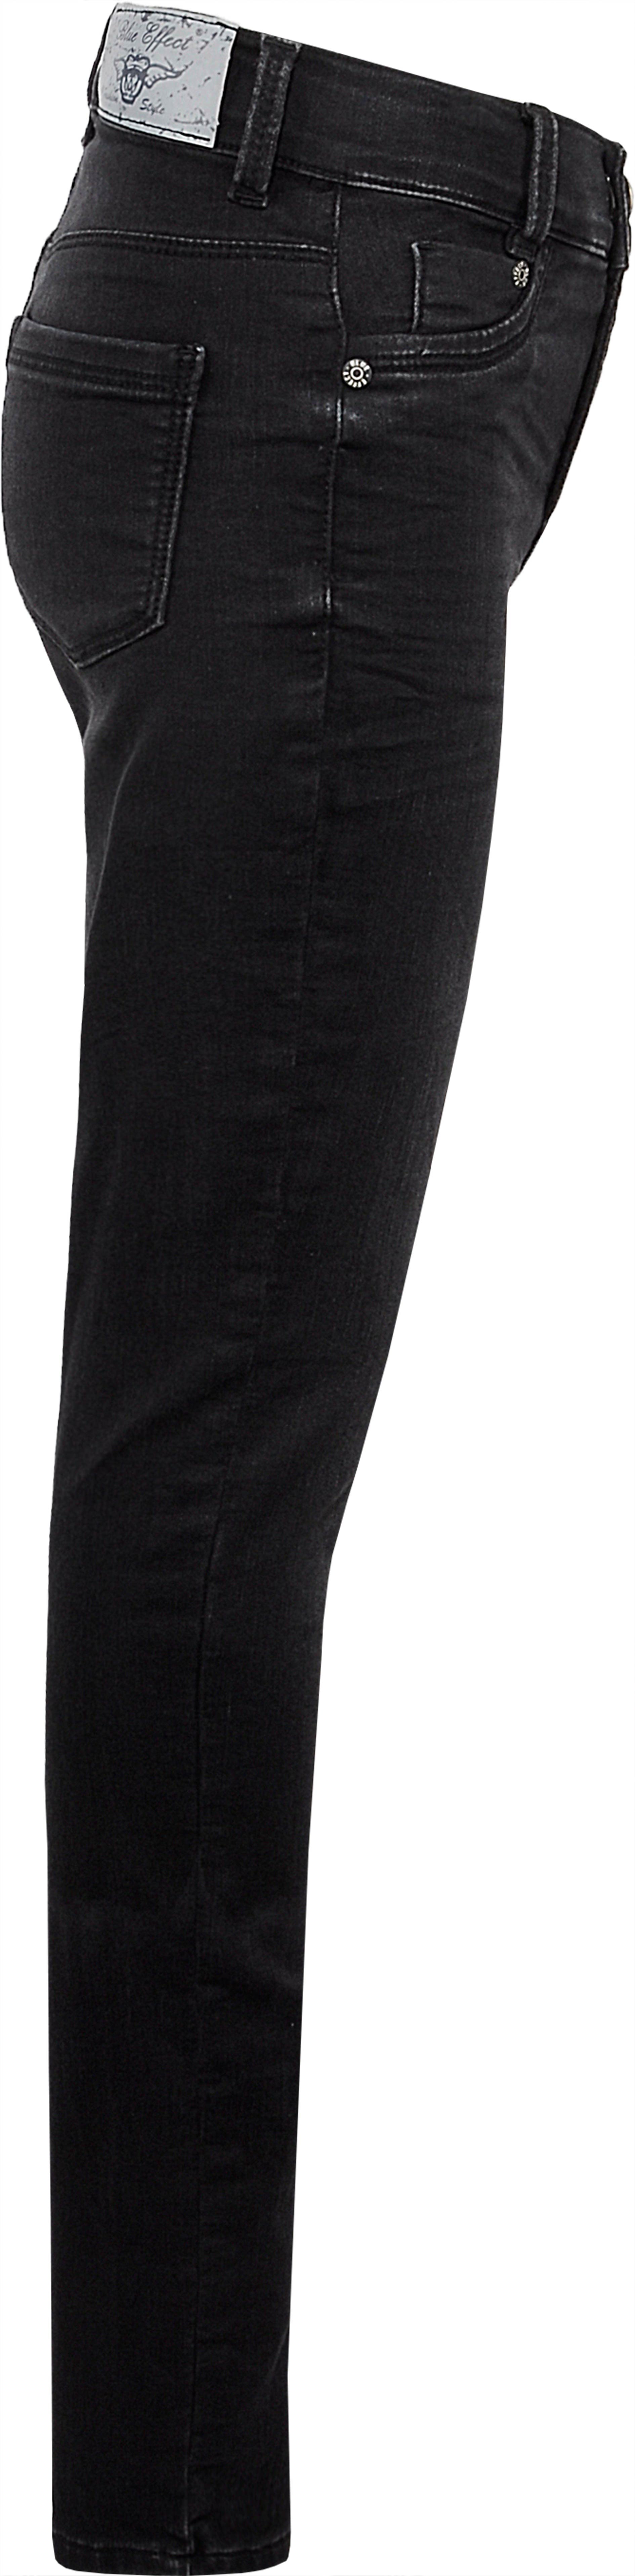 1167-NOS Girls High-Waist Jean Ultrastretch, Skinny, verfügbar in Slim,Normal